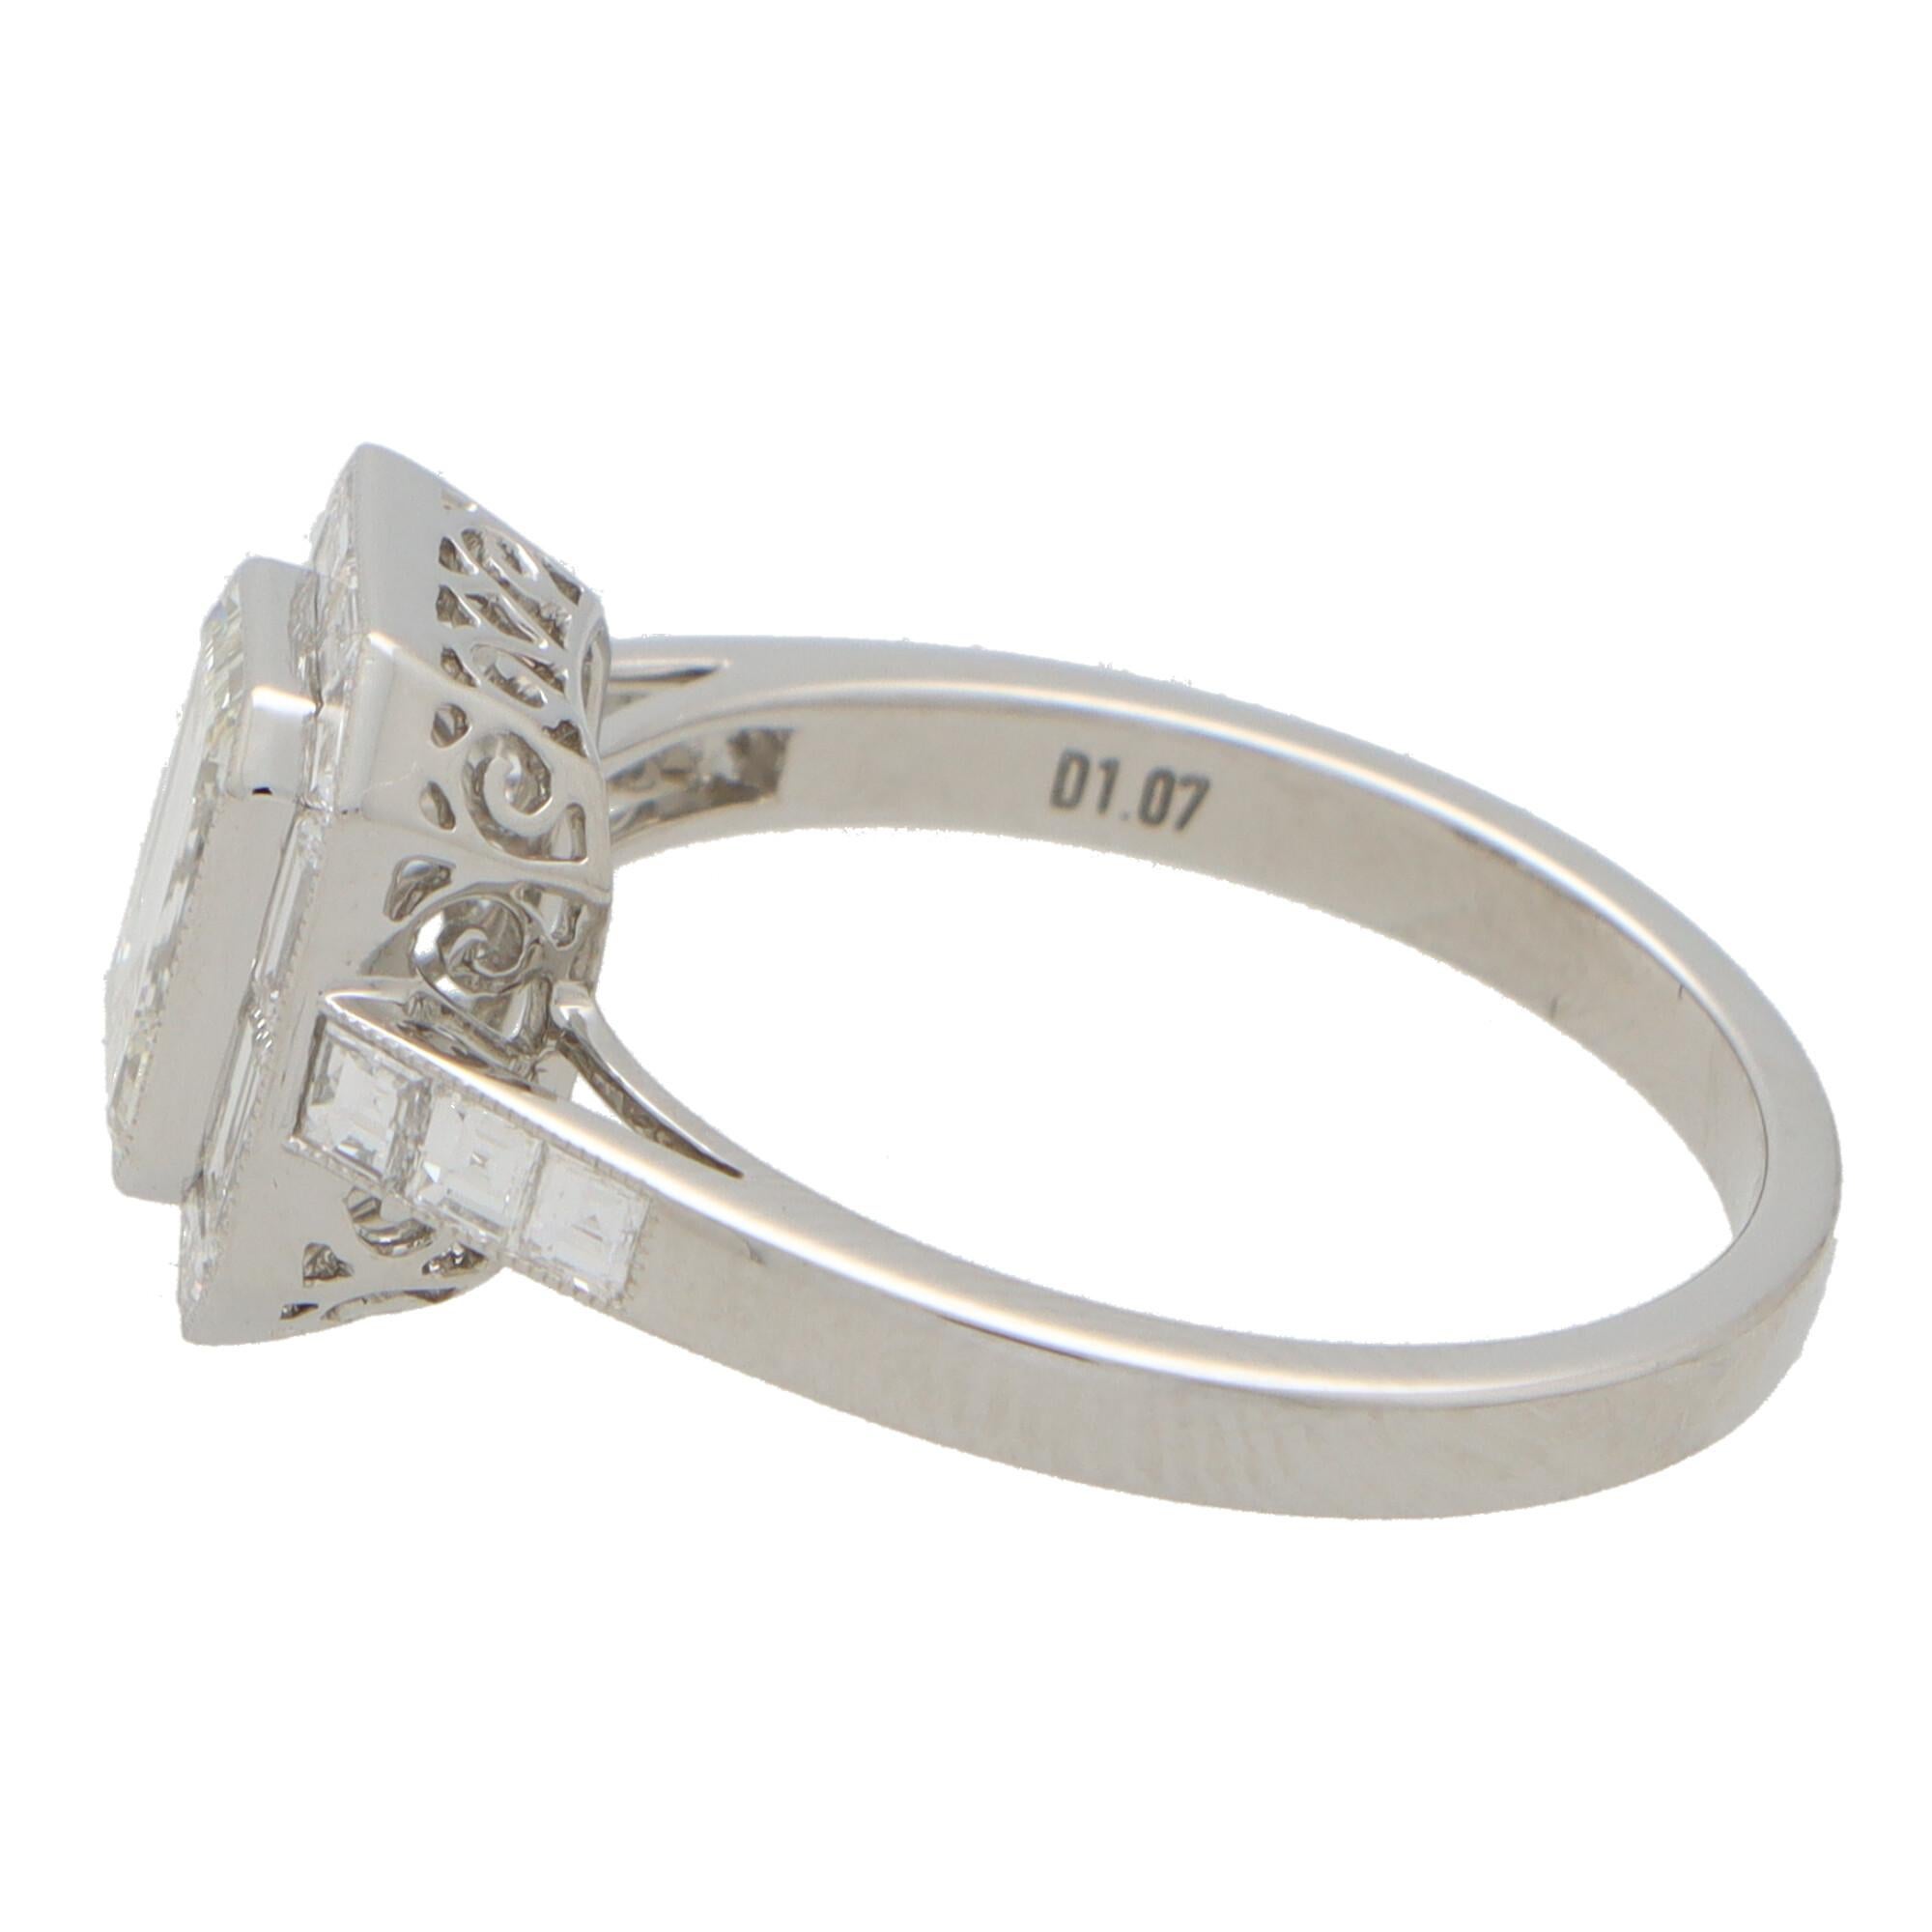 Women's or Men's GIA Certified Art Deco Inspired Emerald Cut Diamond Halo Ring Set in Platinum